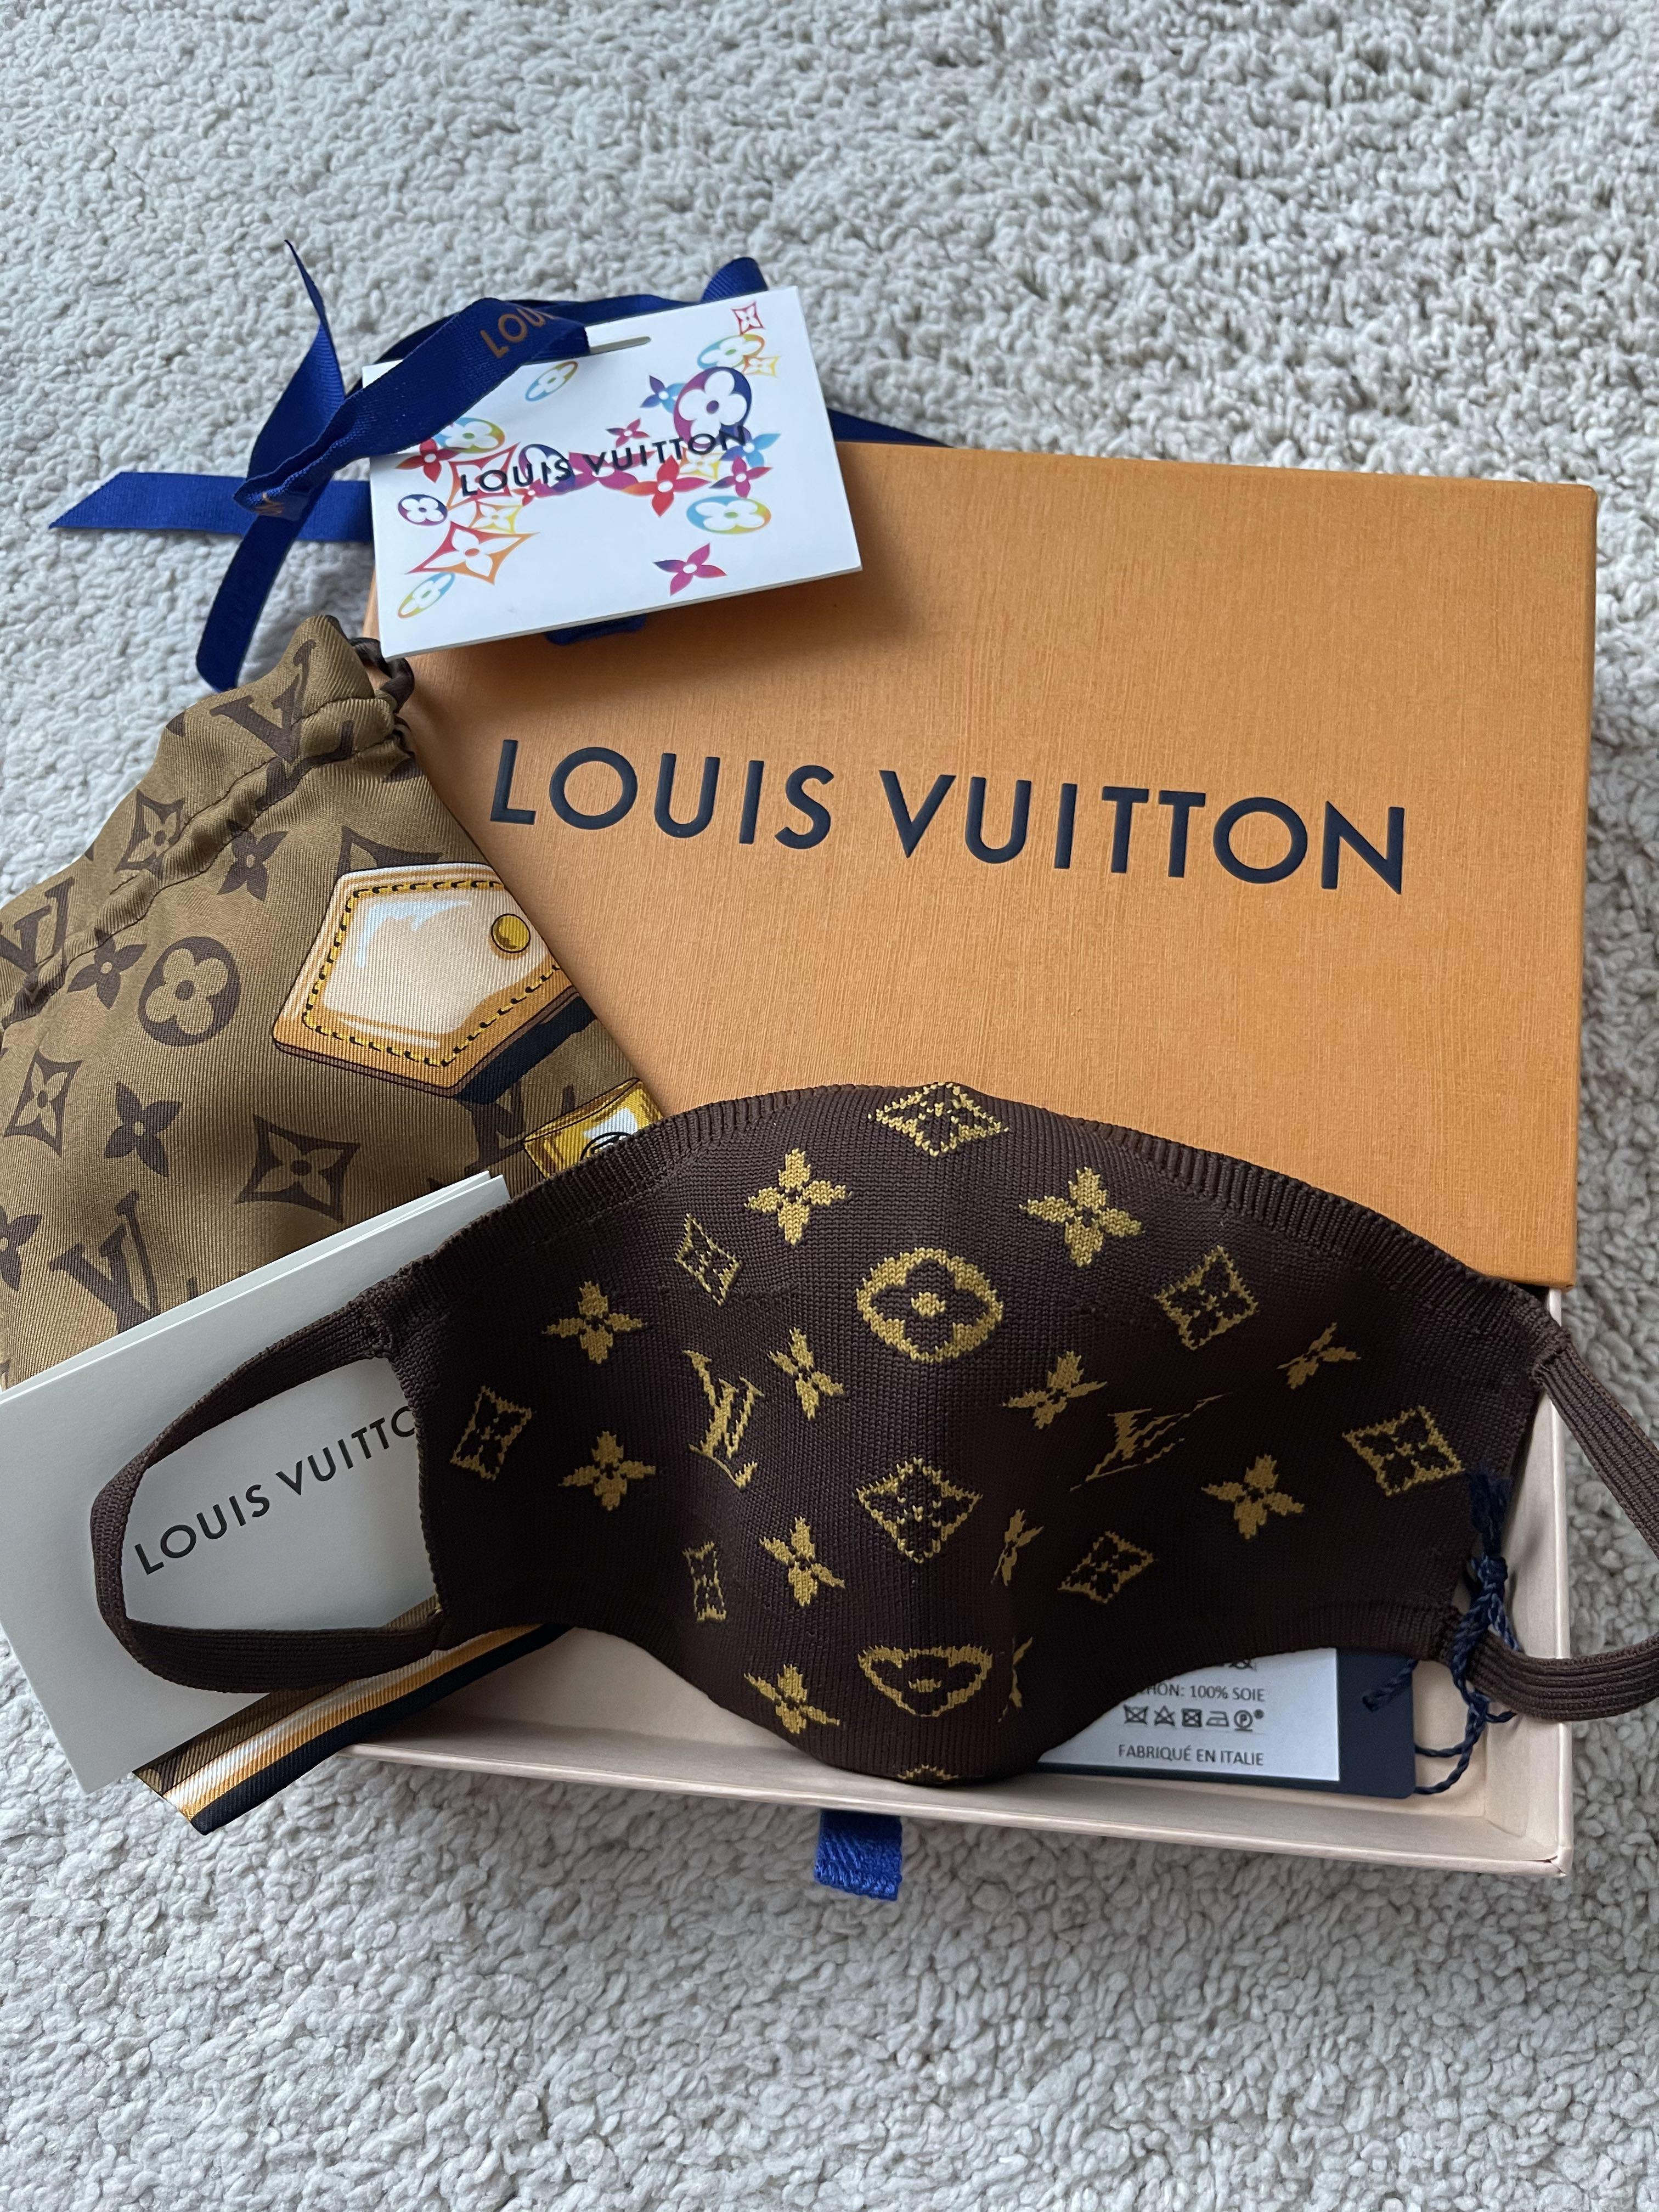 Louis Vuitton Maske Kaufen Amazoncom  semashowcom